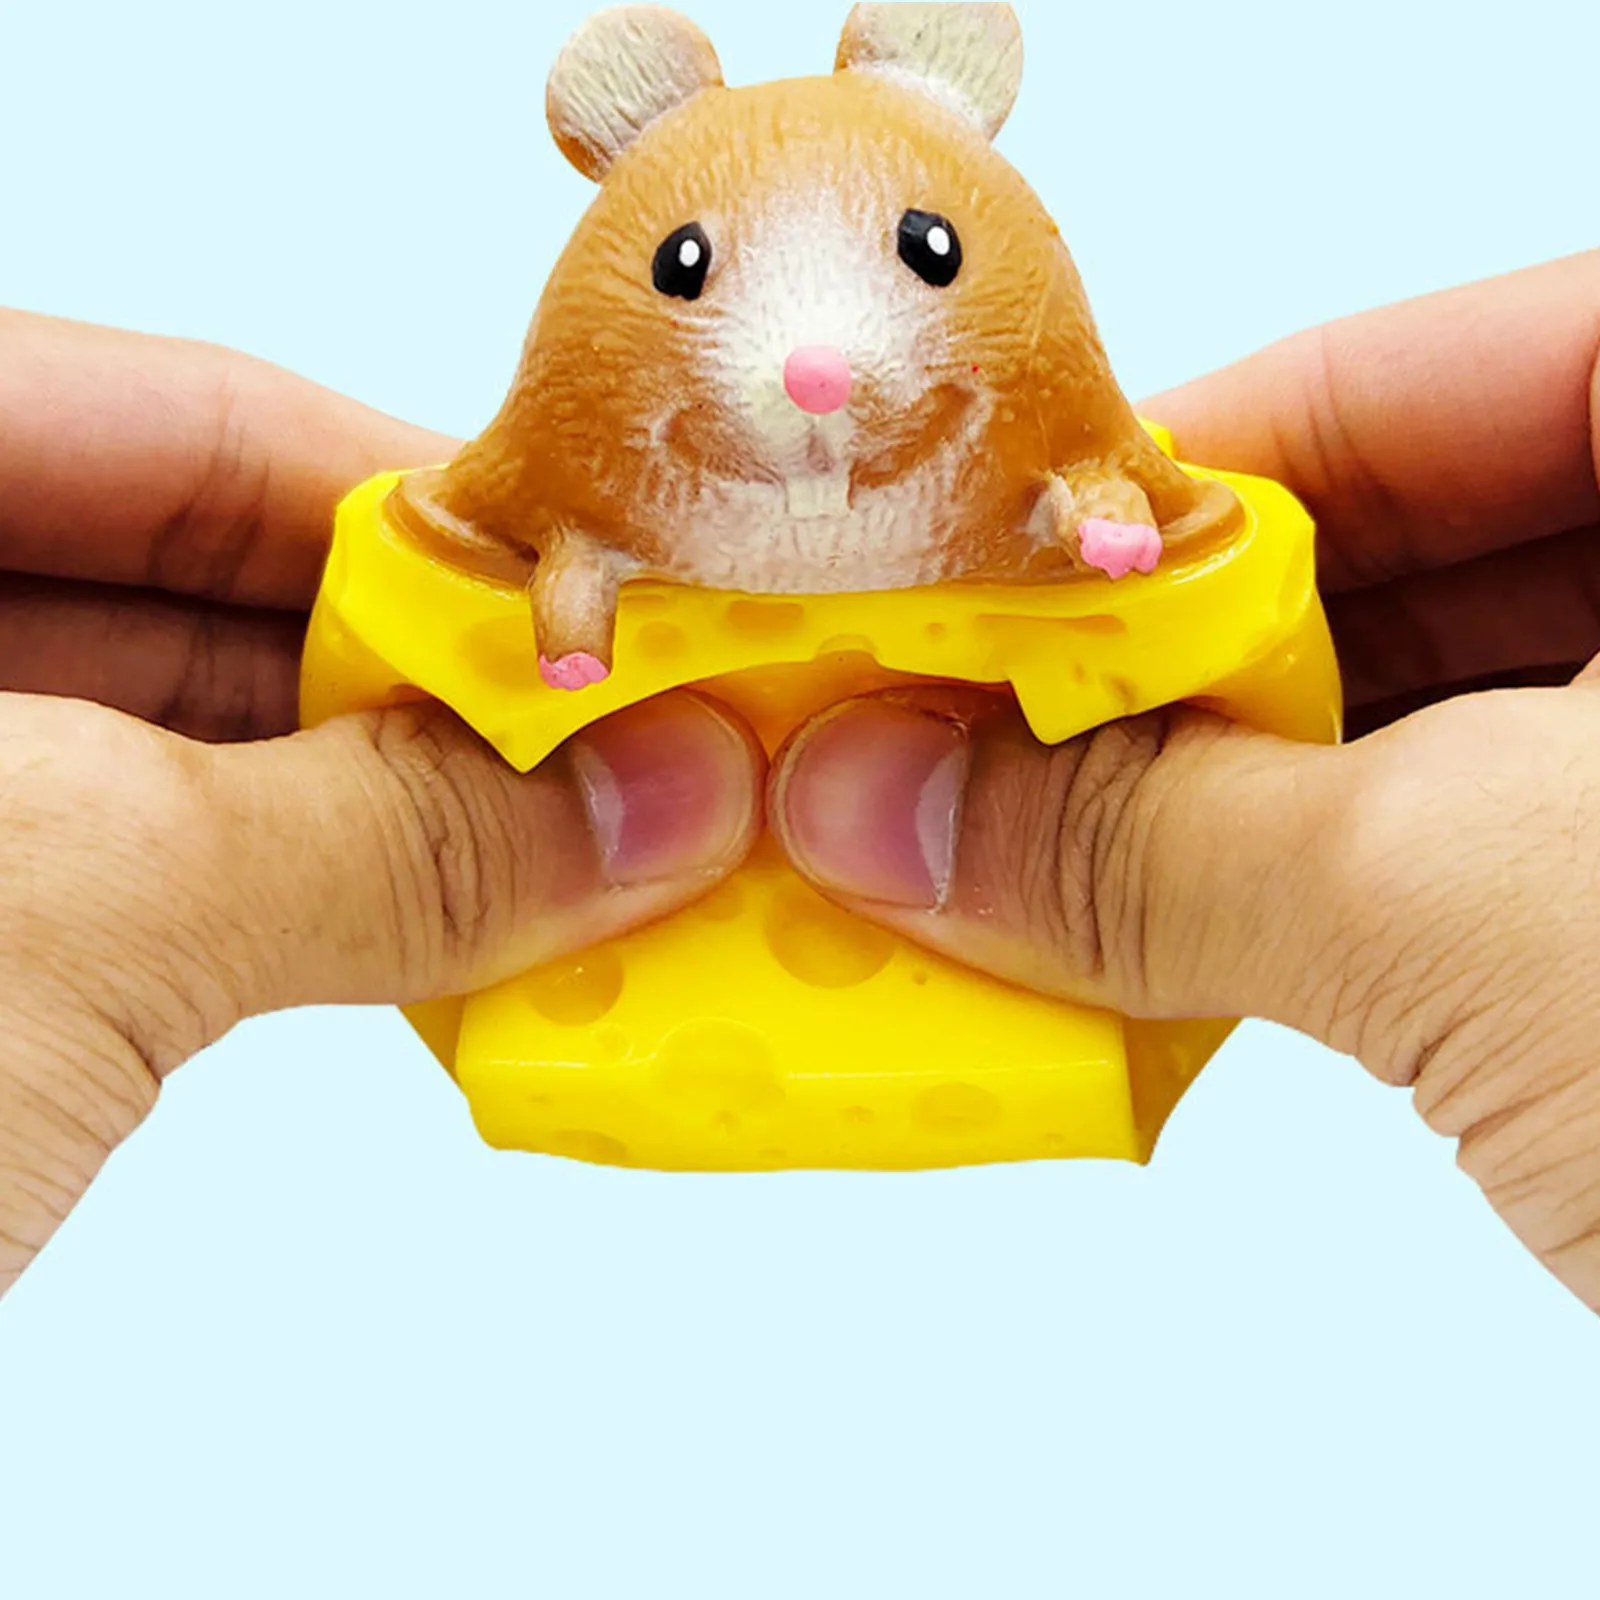 Мышка антистресс. Сыр антистресс с мышками своими руками.